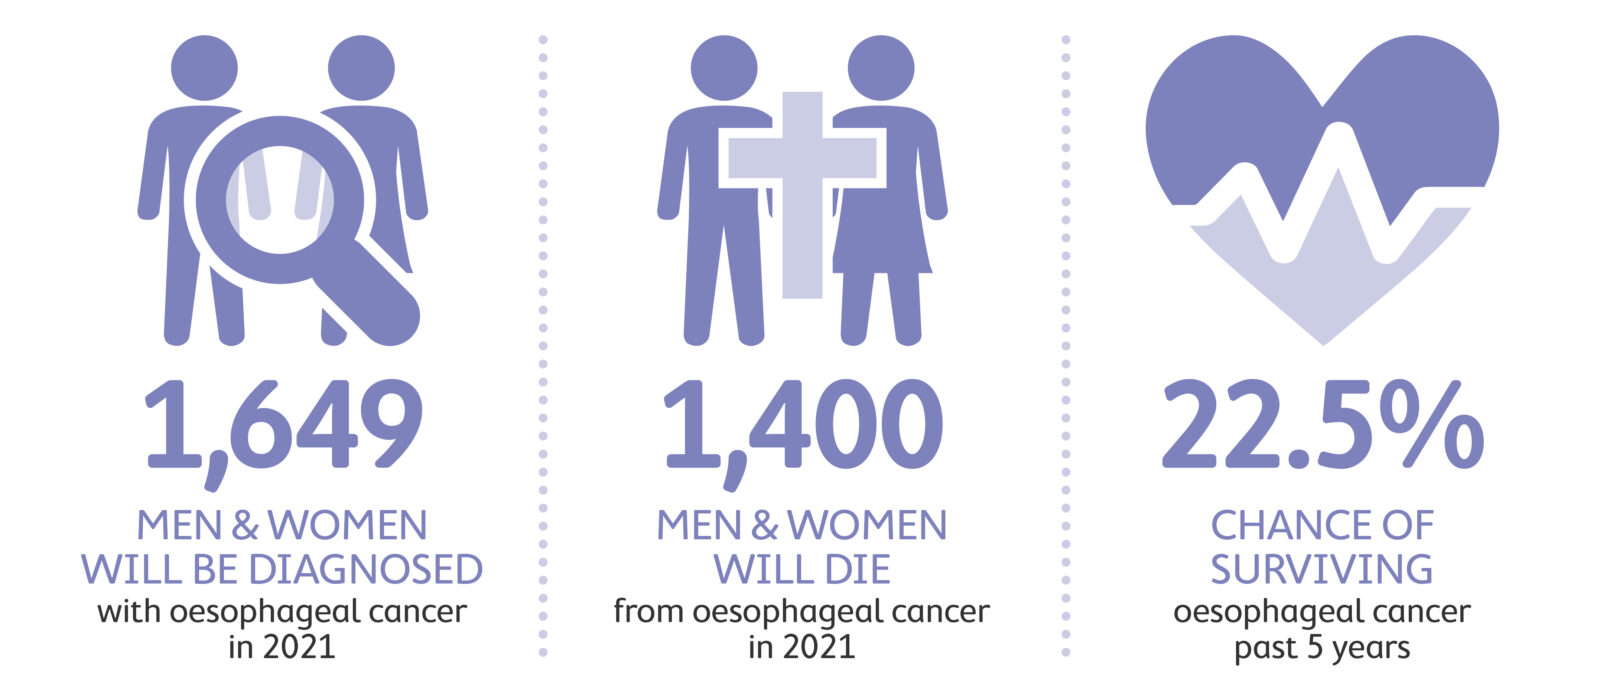 Oesophageal cancer statistics 2021